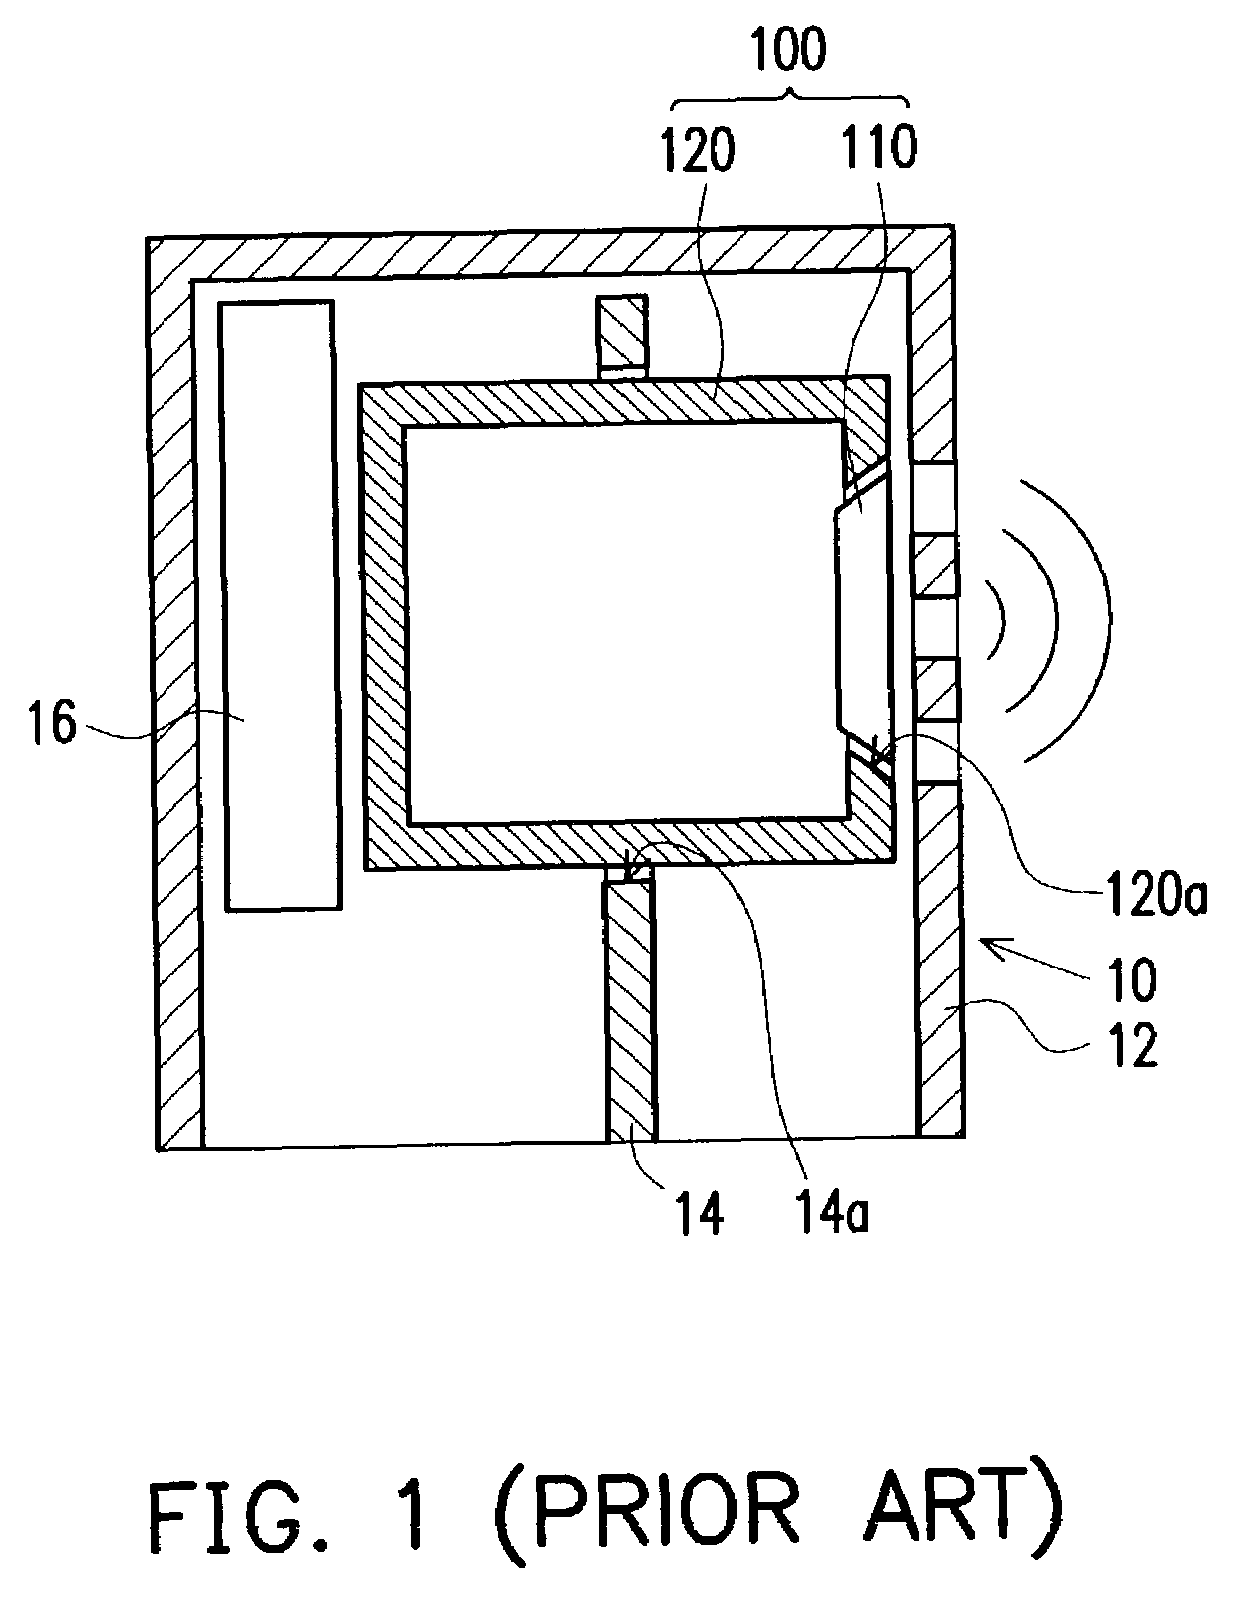 Speaker module design